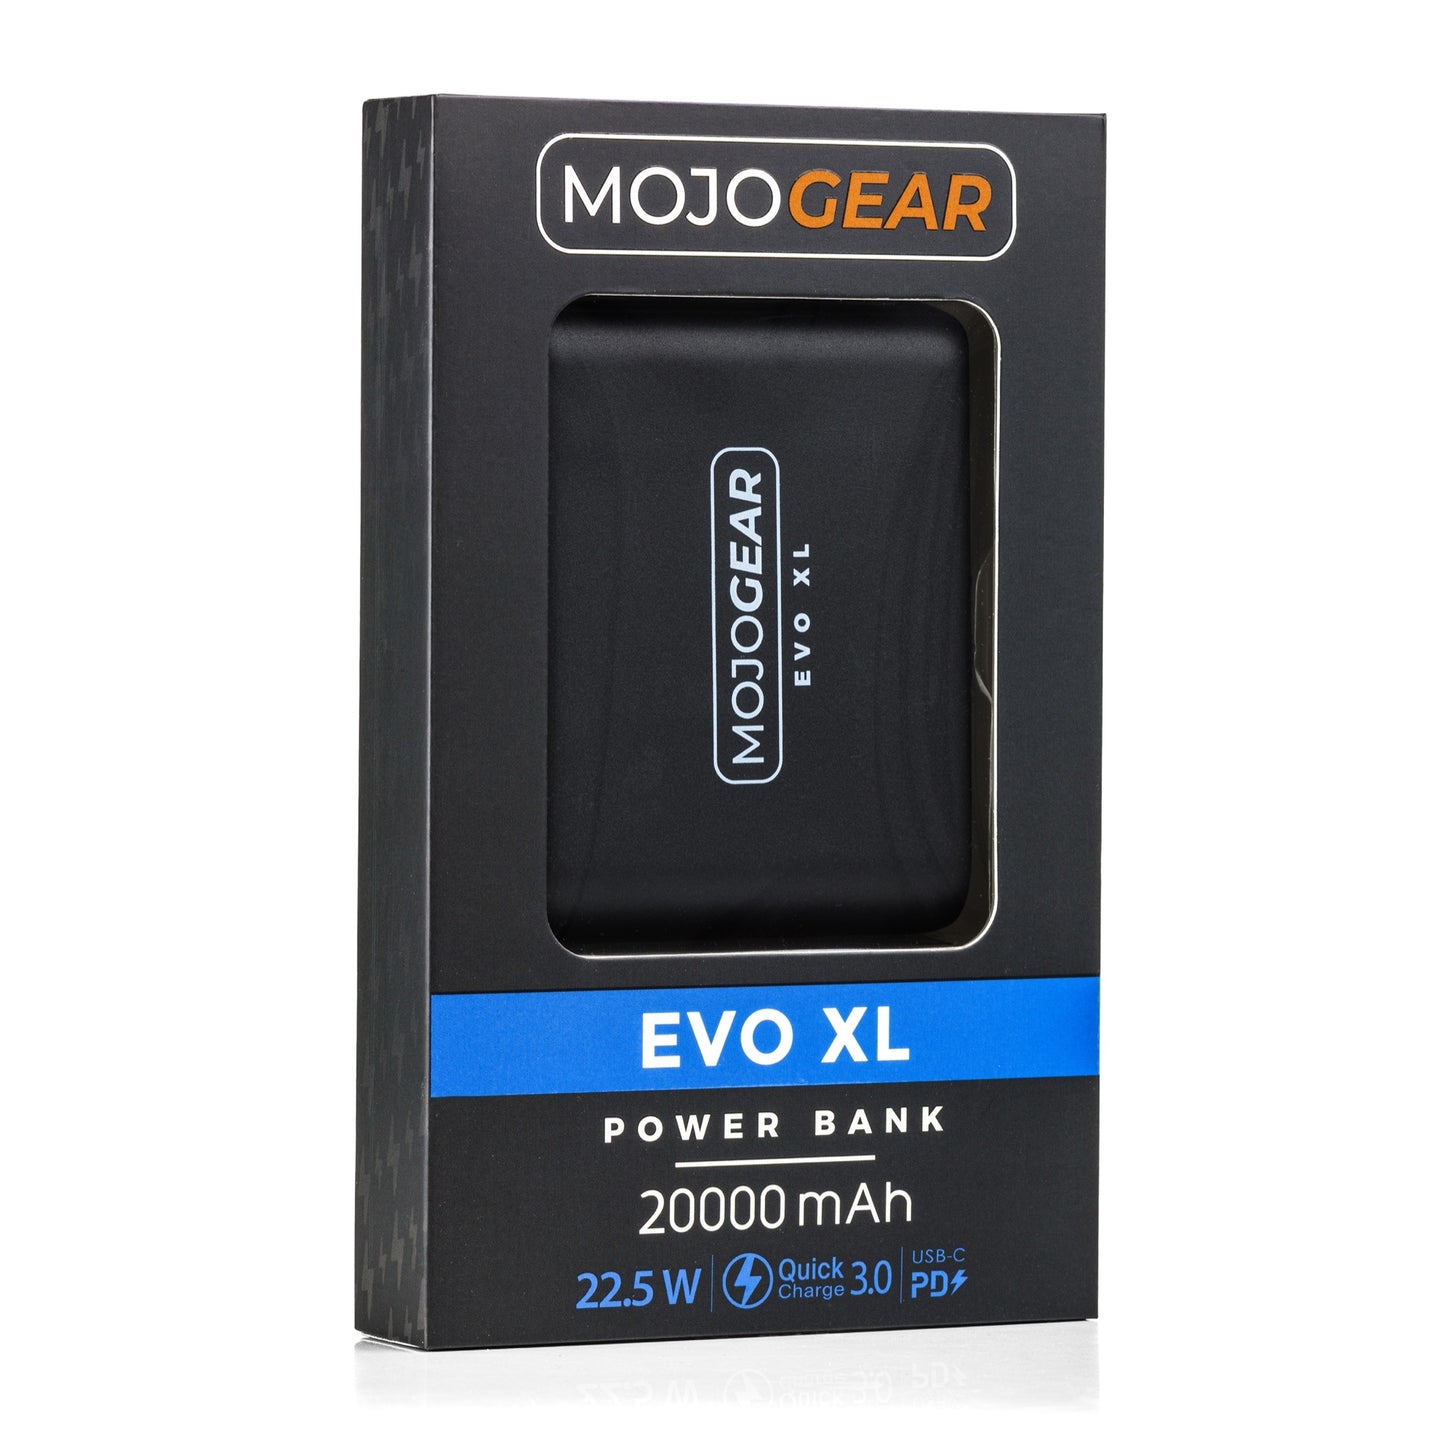 MOJOGEAR EVO XL power bank 20,000mAh